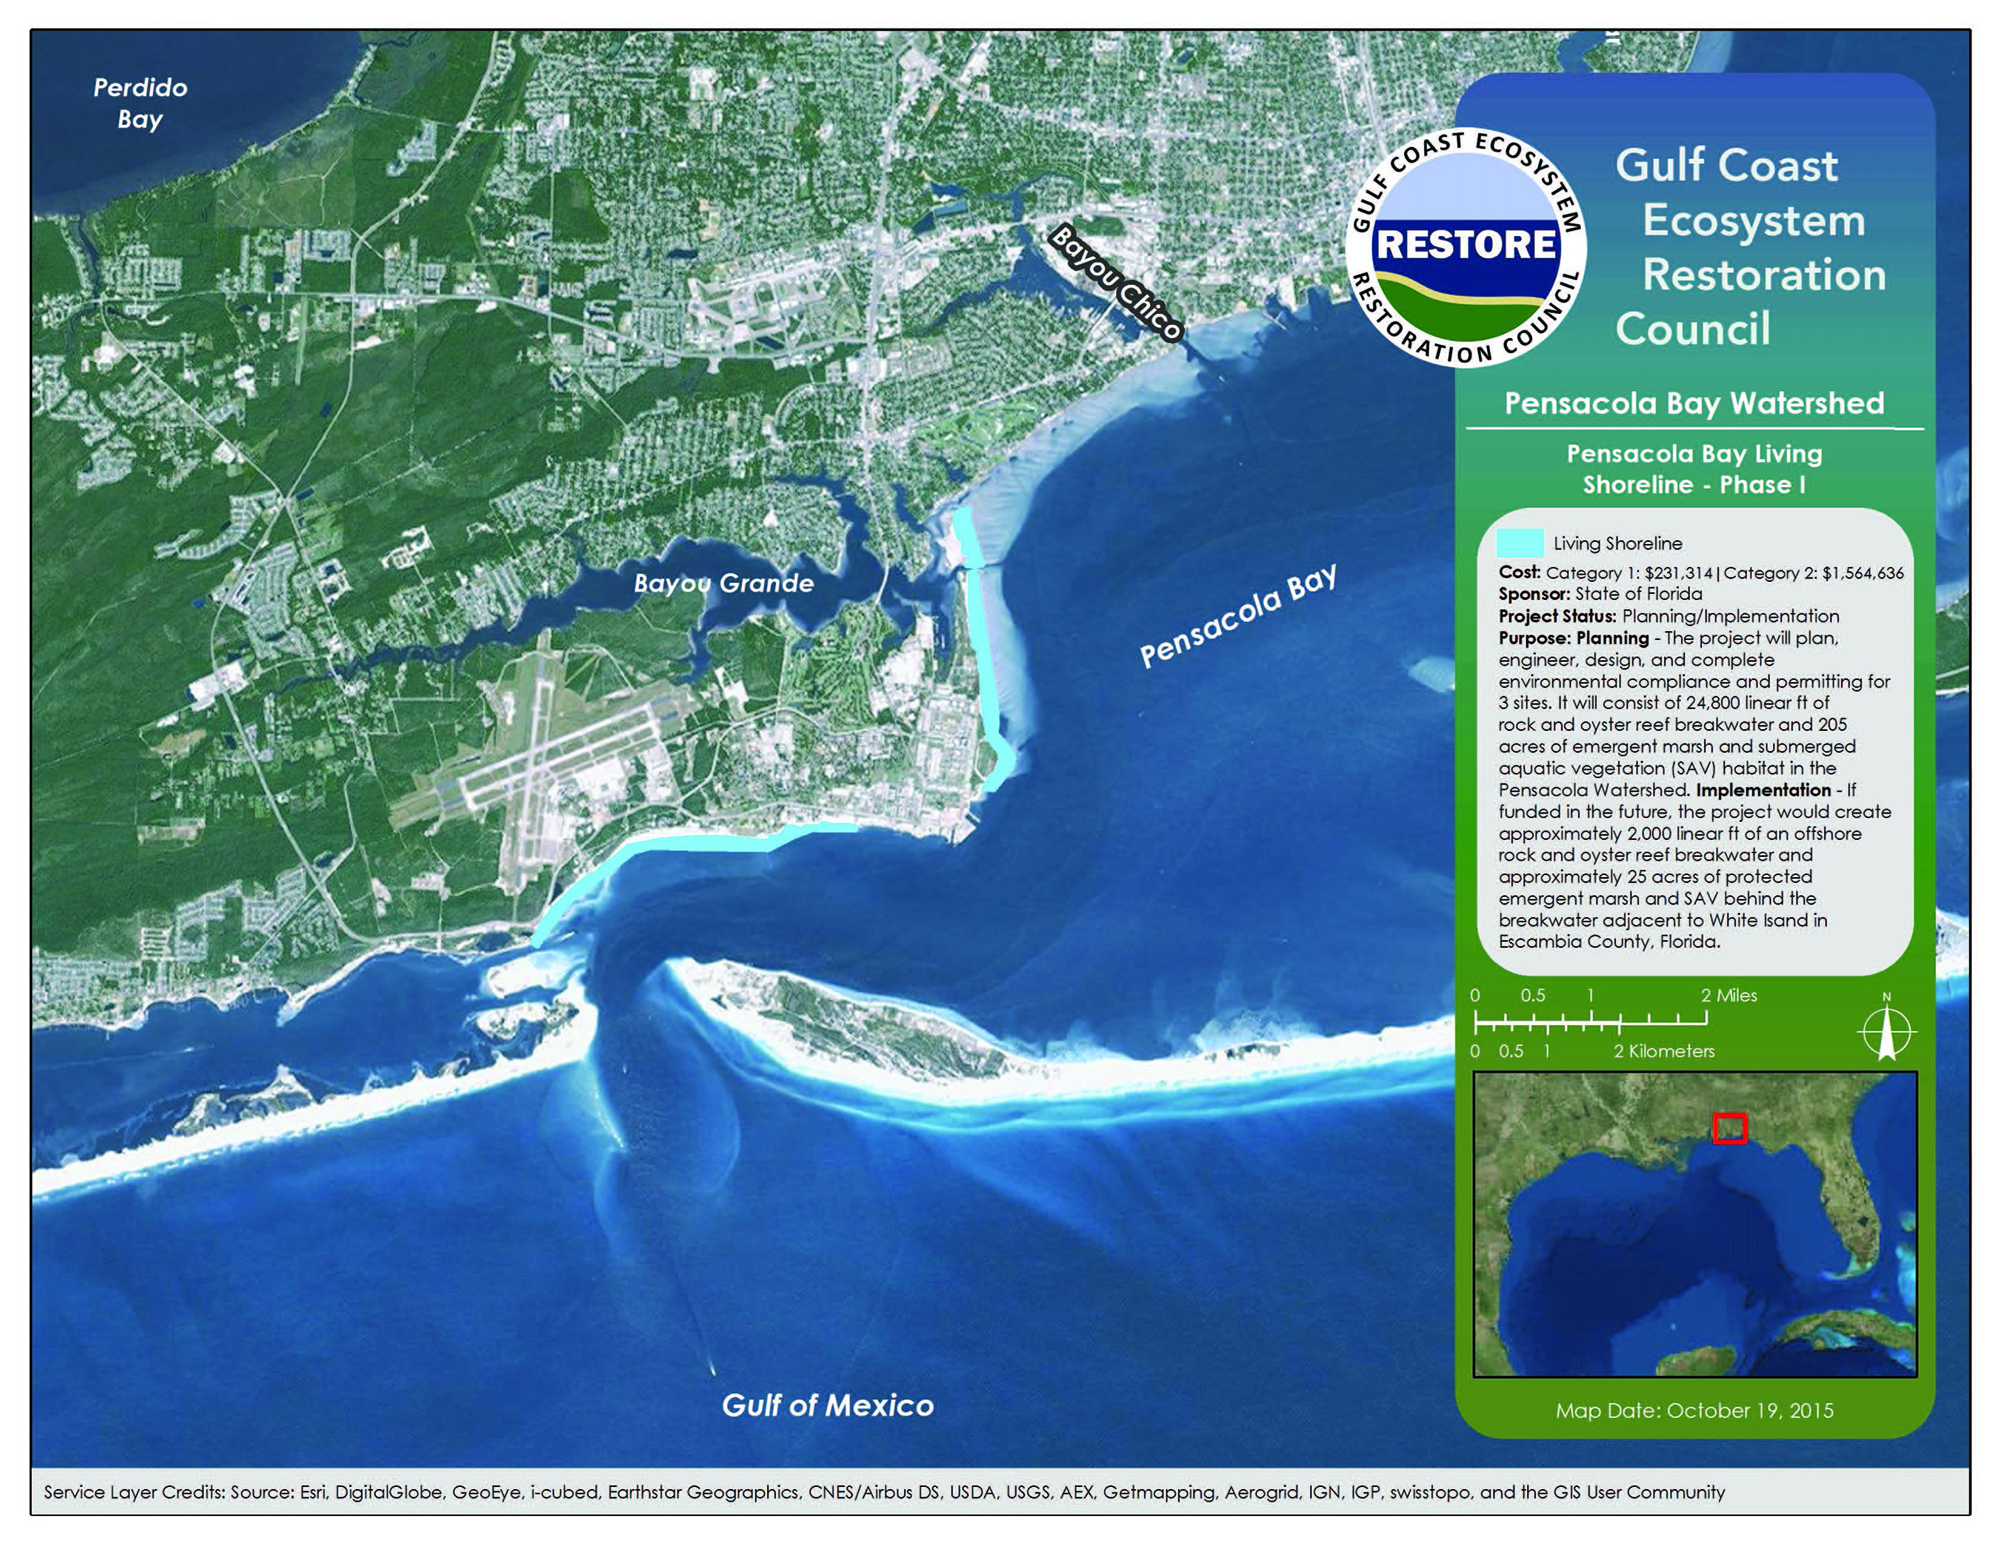 Pensacola Bay Living Shoreline for RESTORE Update